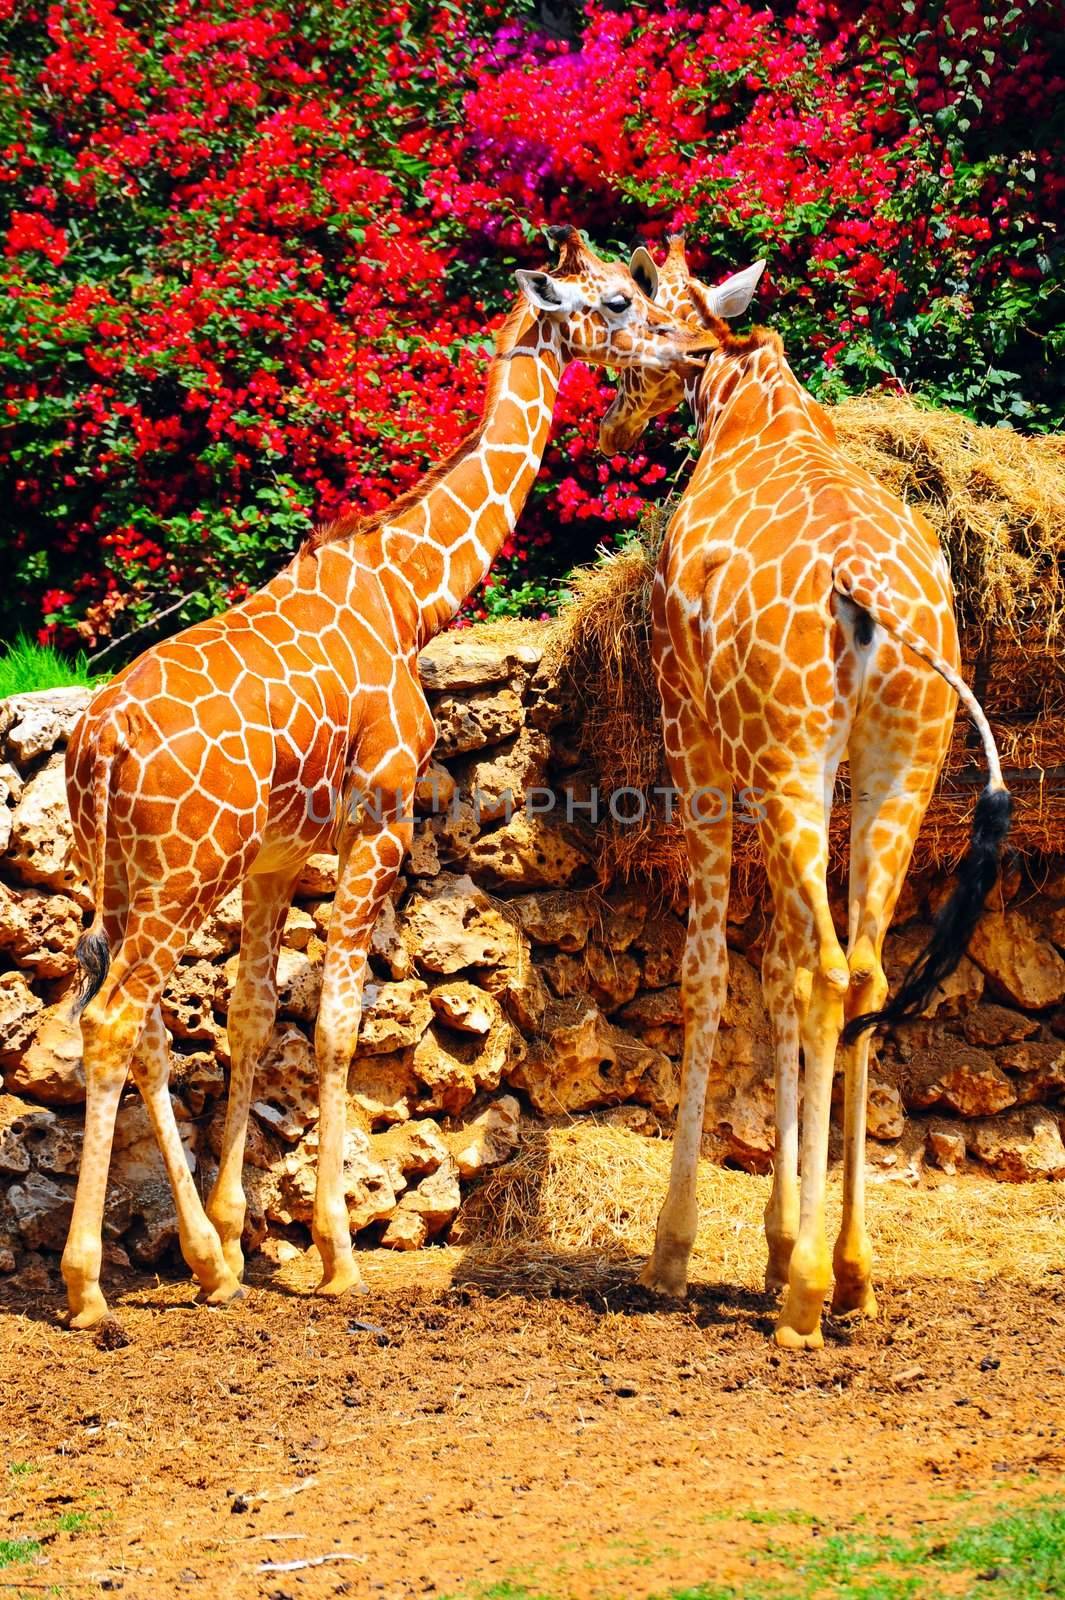 Giraffes by gkuna